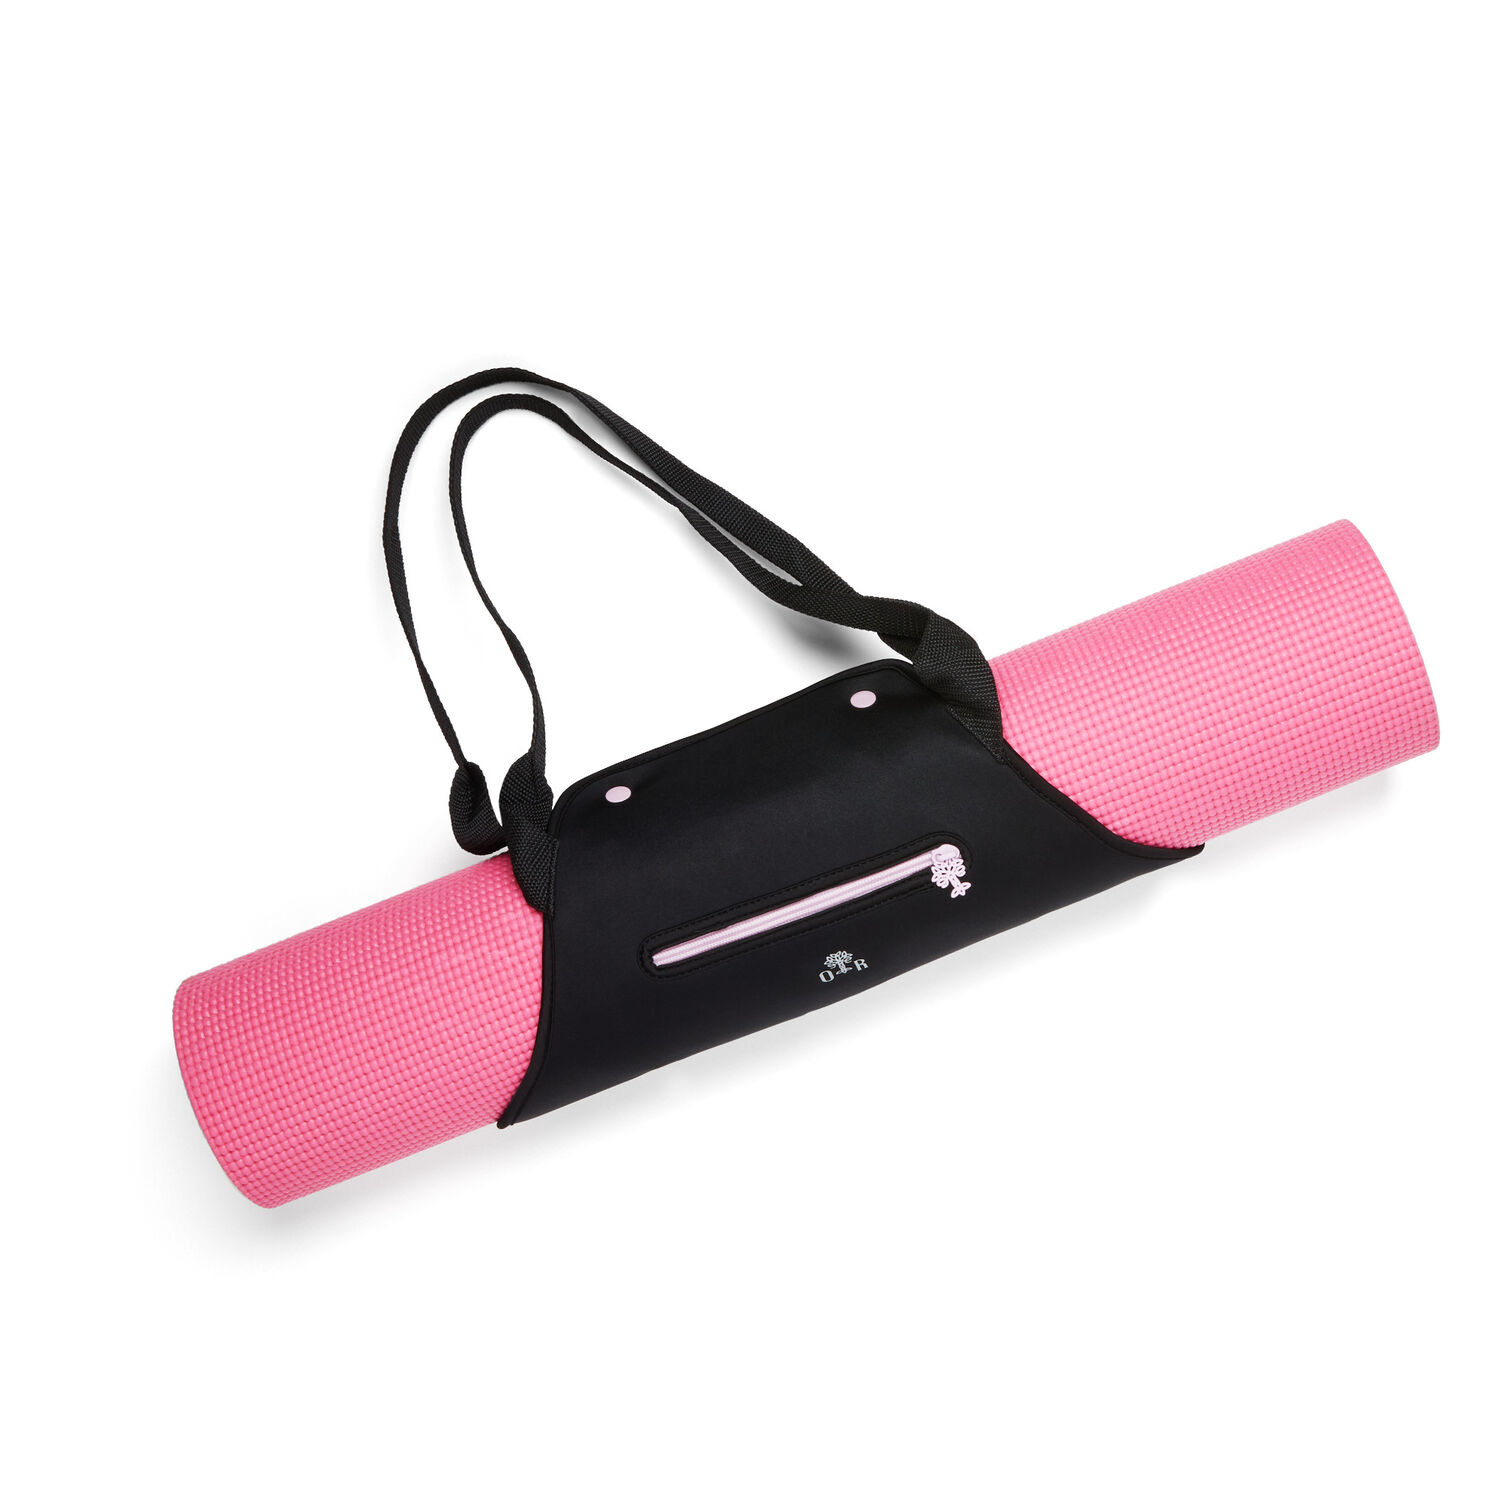 Yoga Mat Bag Sling - Black/Lavender - 1 Item